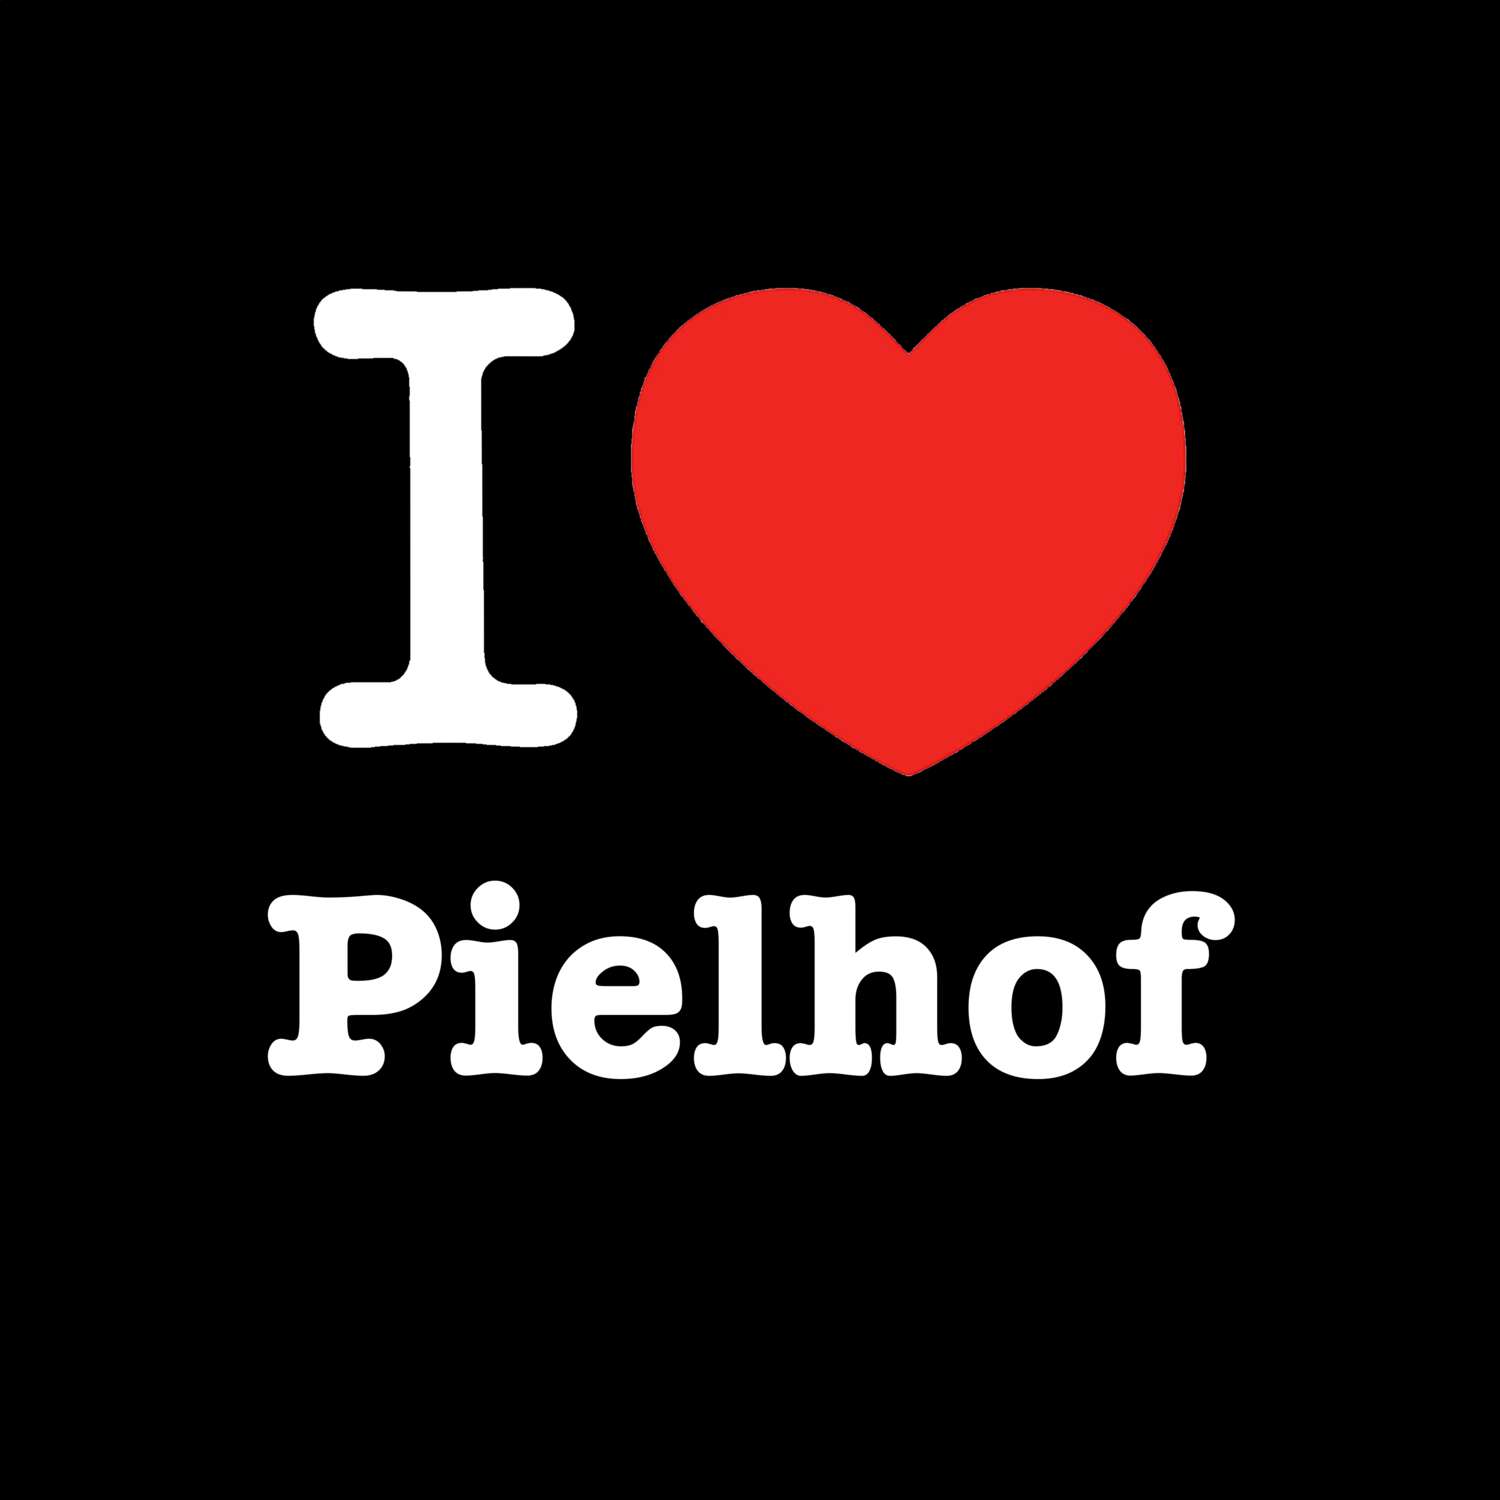 Pielhof T-Shirt »I love«